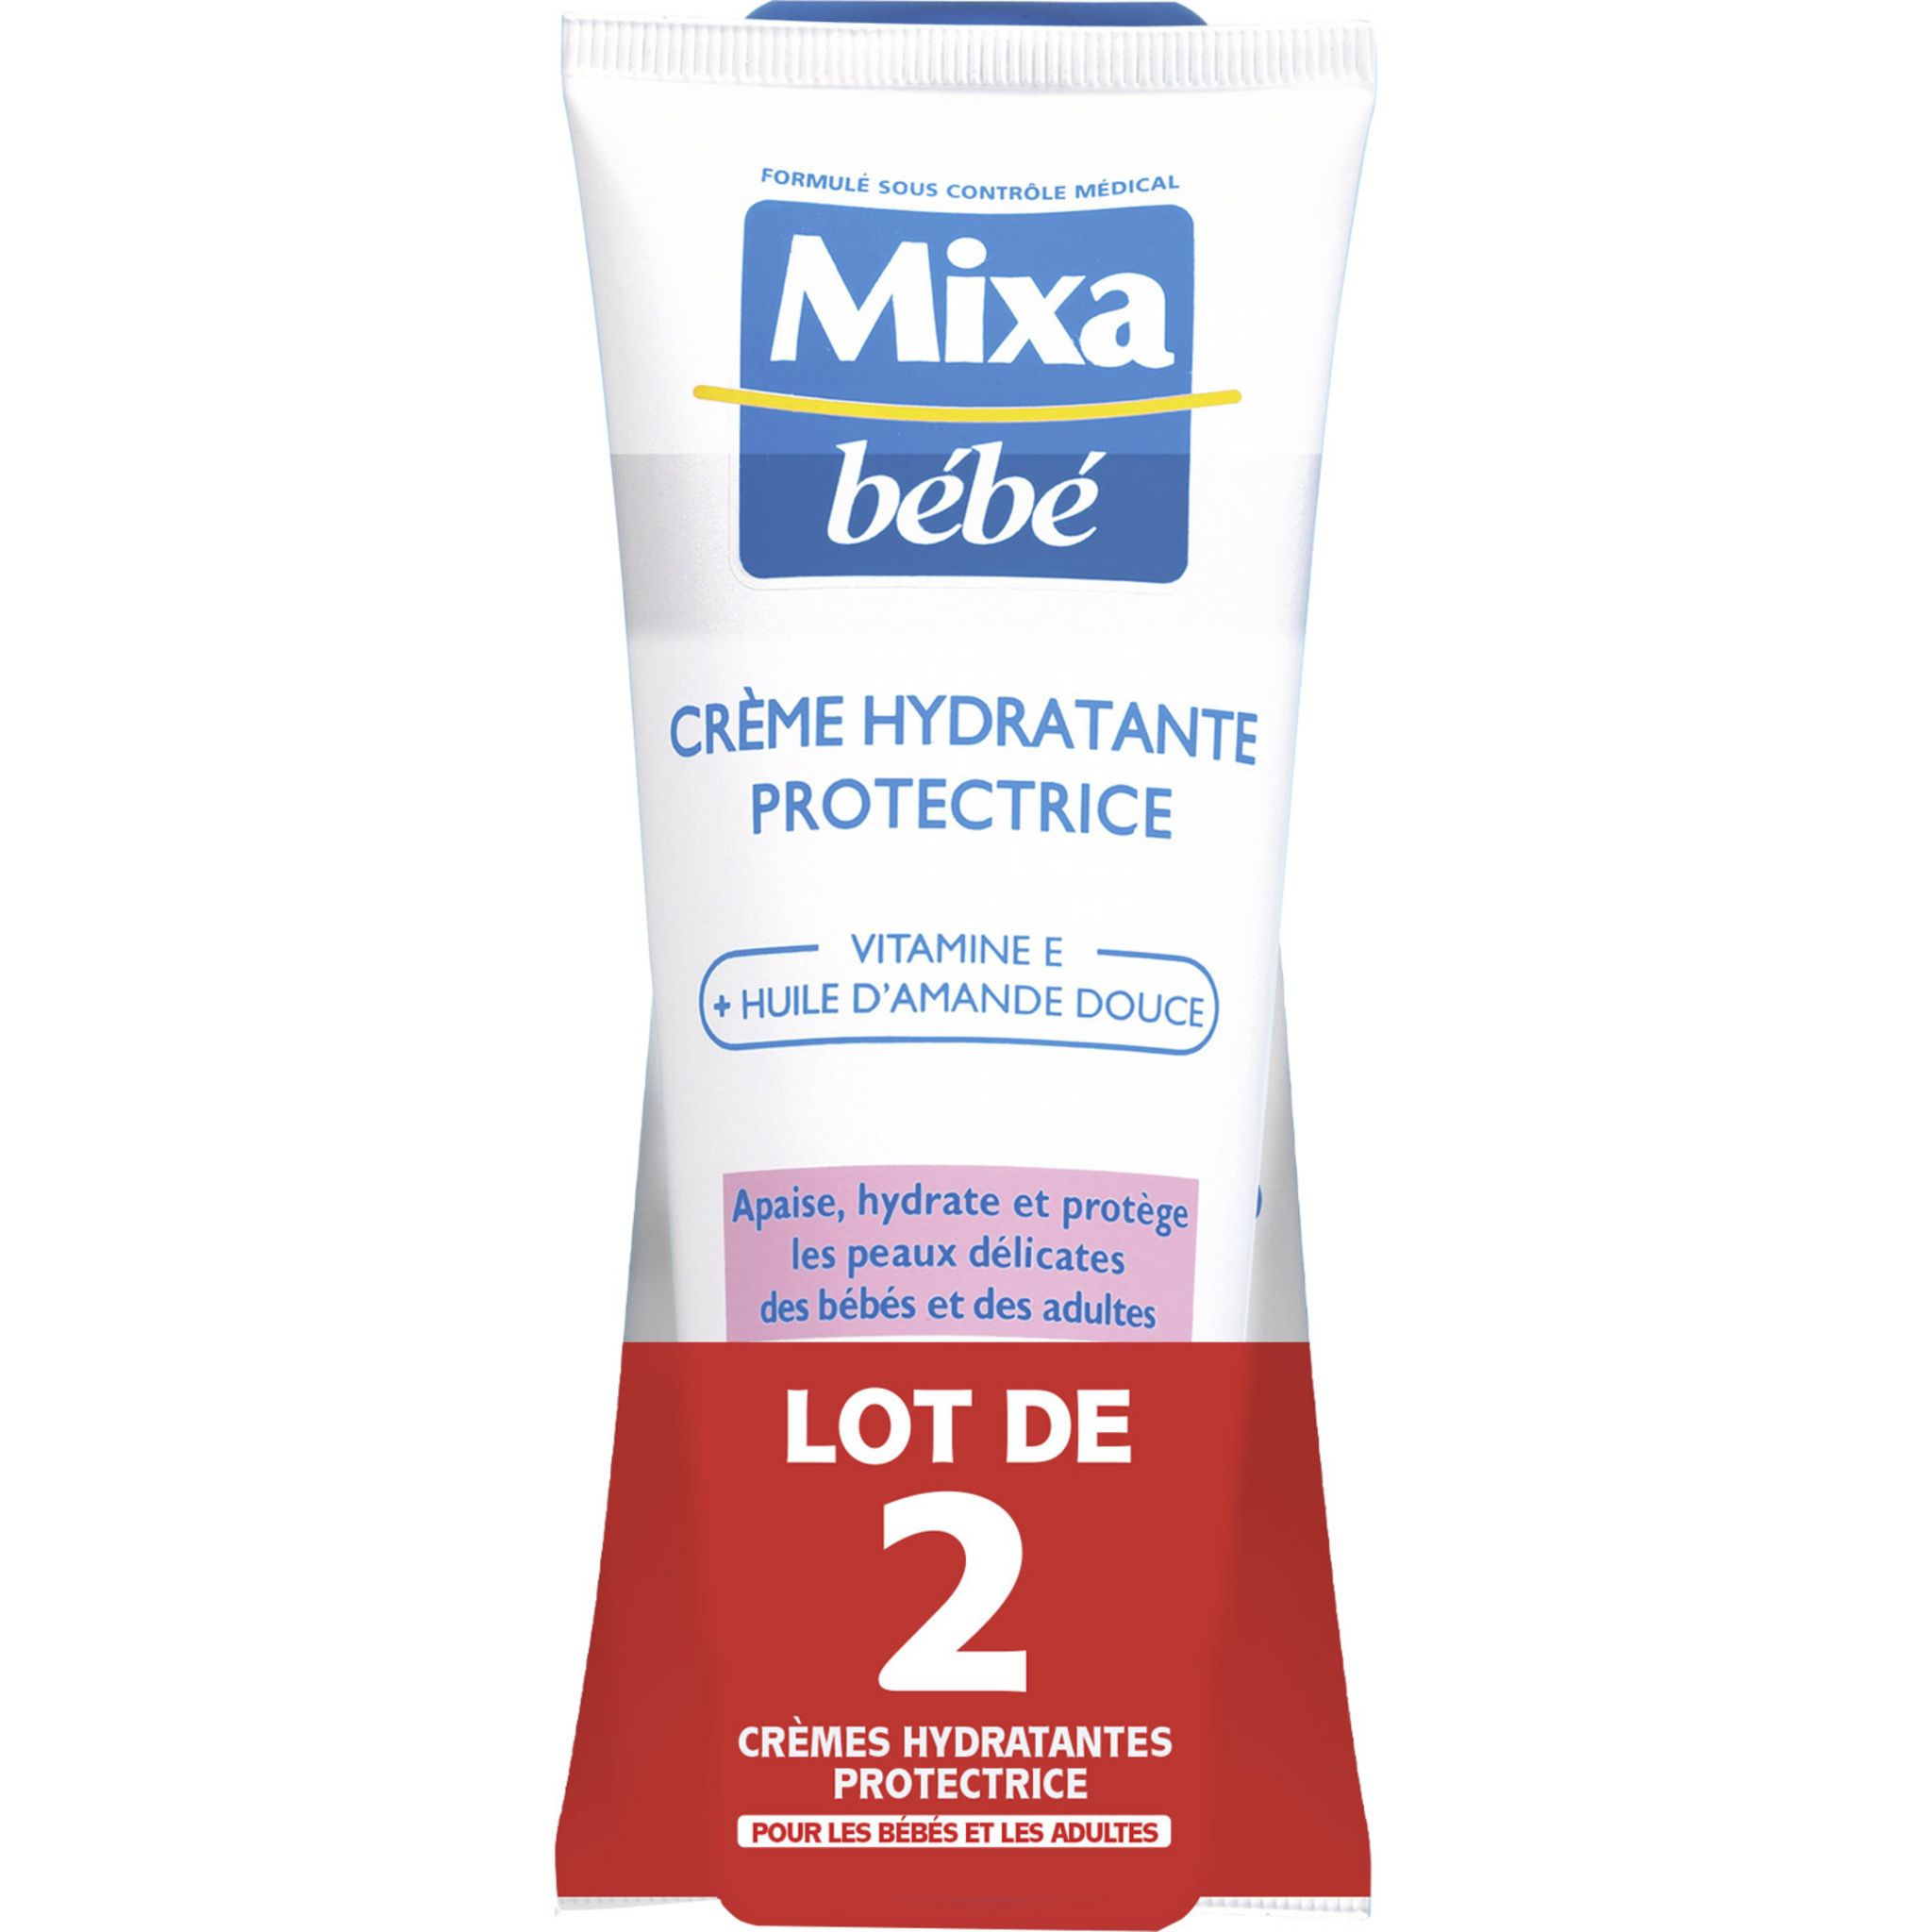 Analyse de Crème hydratante protectrice - Mixa,Mixa bébé,LASCAD